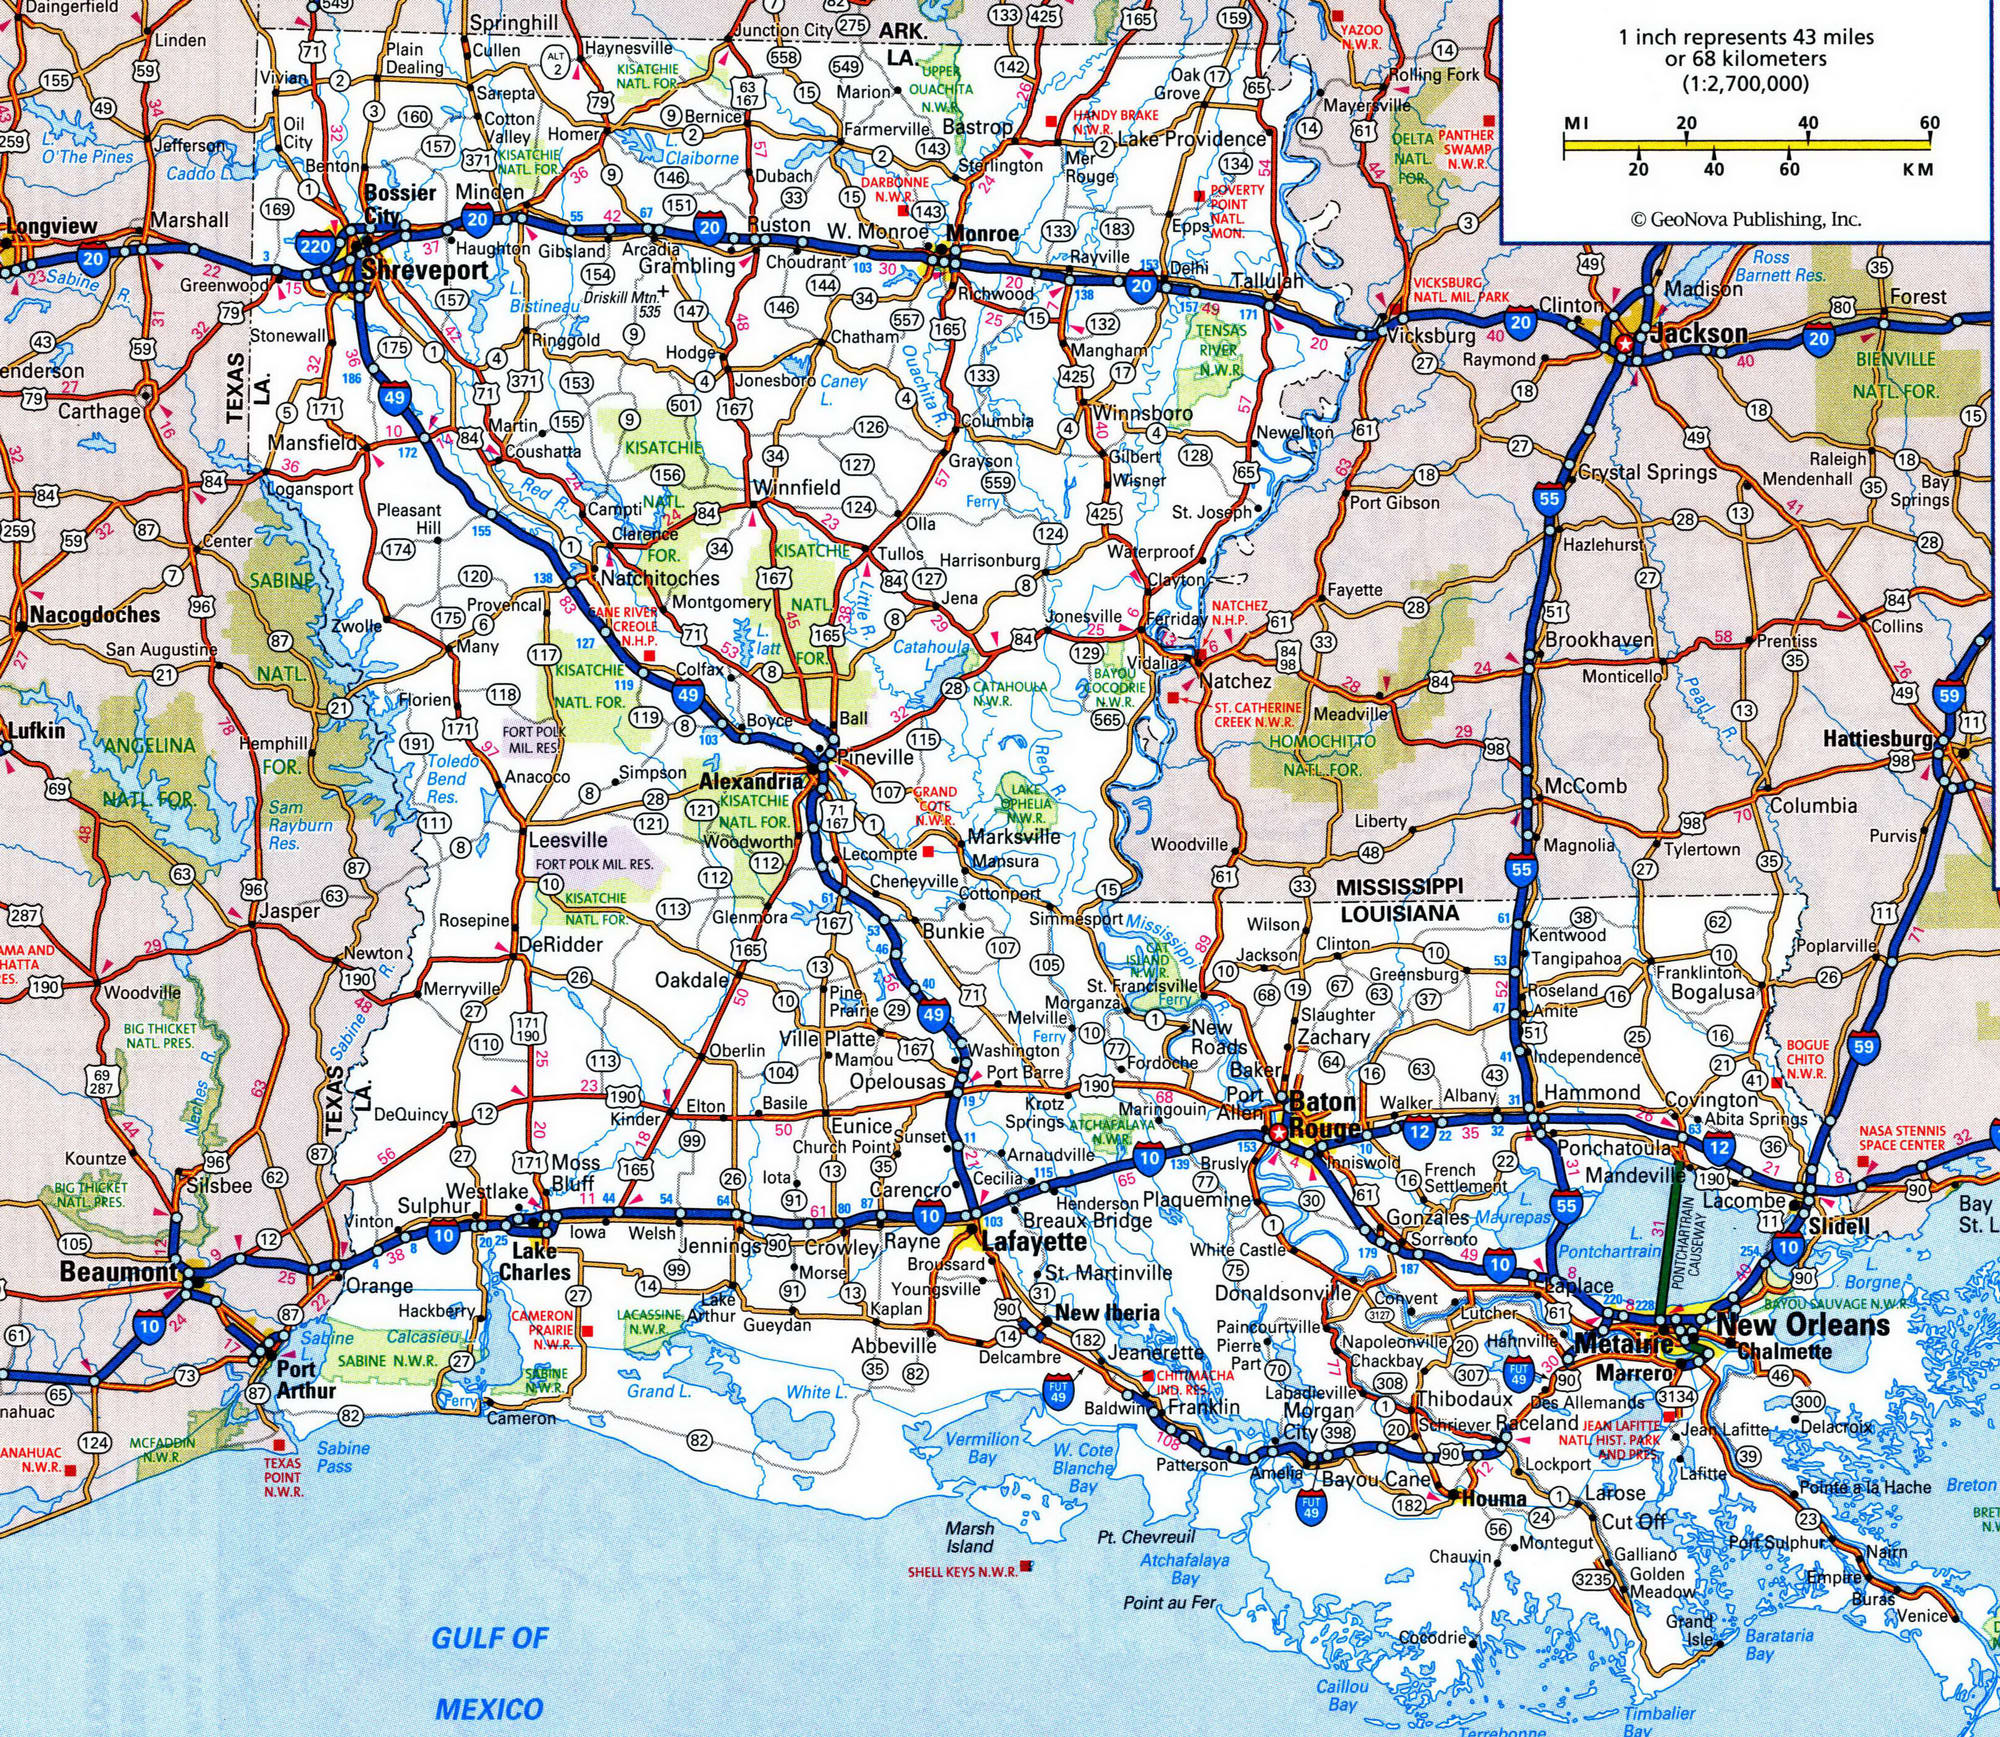 Detailed roads map of Louisiana